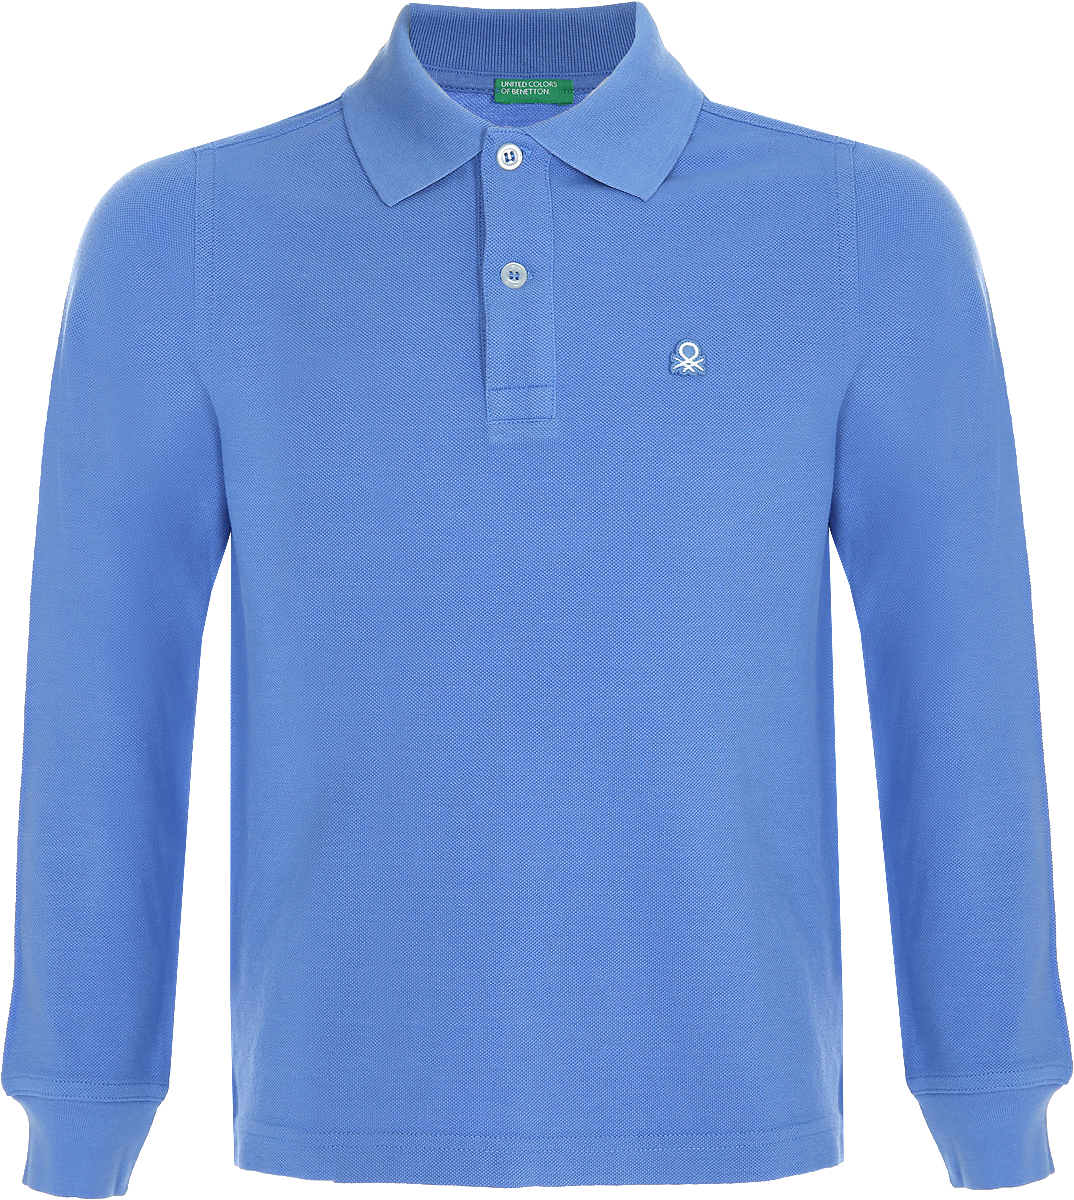 Кофта для мальчика United Colors of Benetton, цвет: голубой. 3089C3090_26R. Размер 160